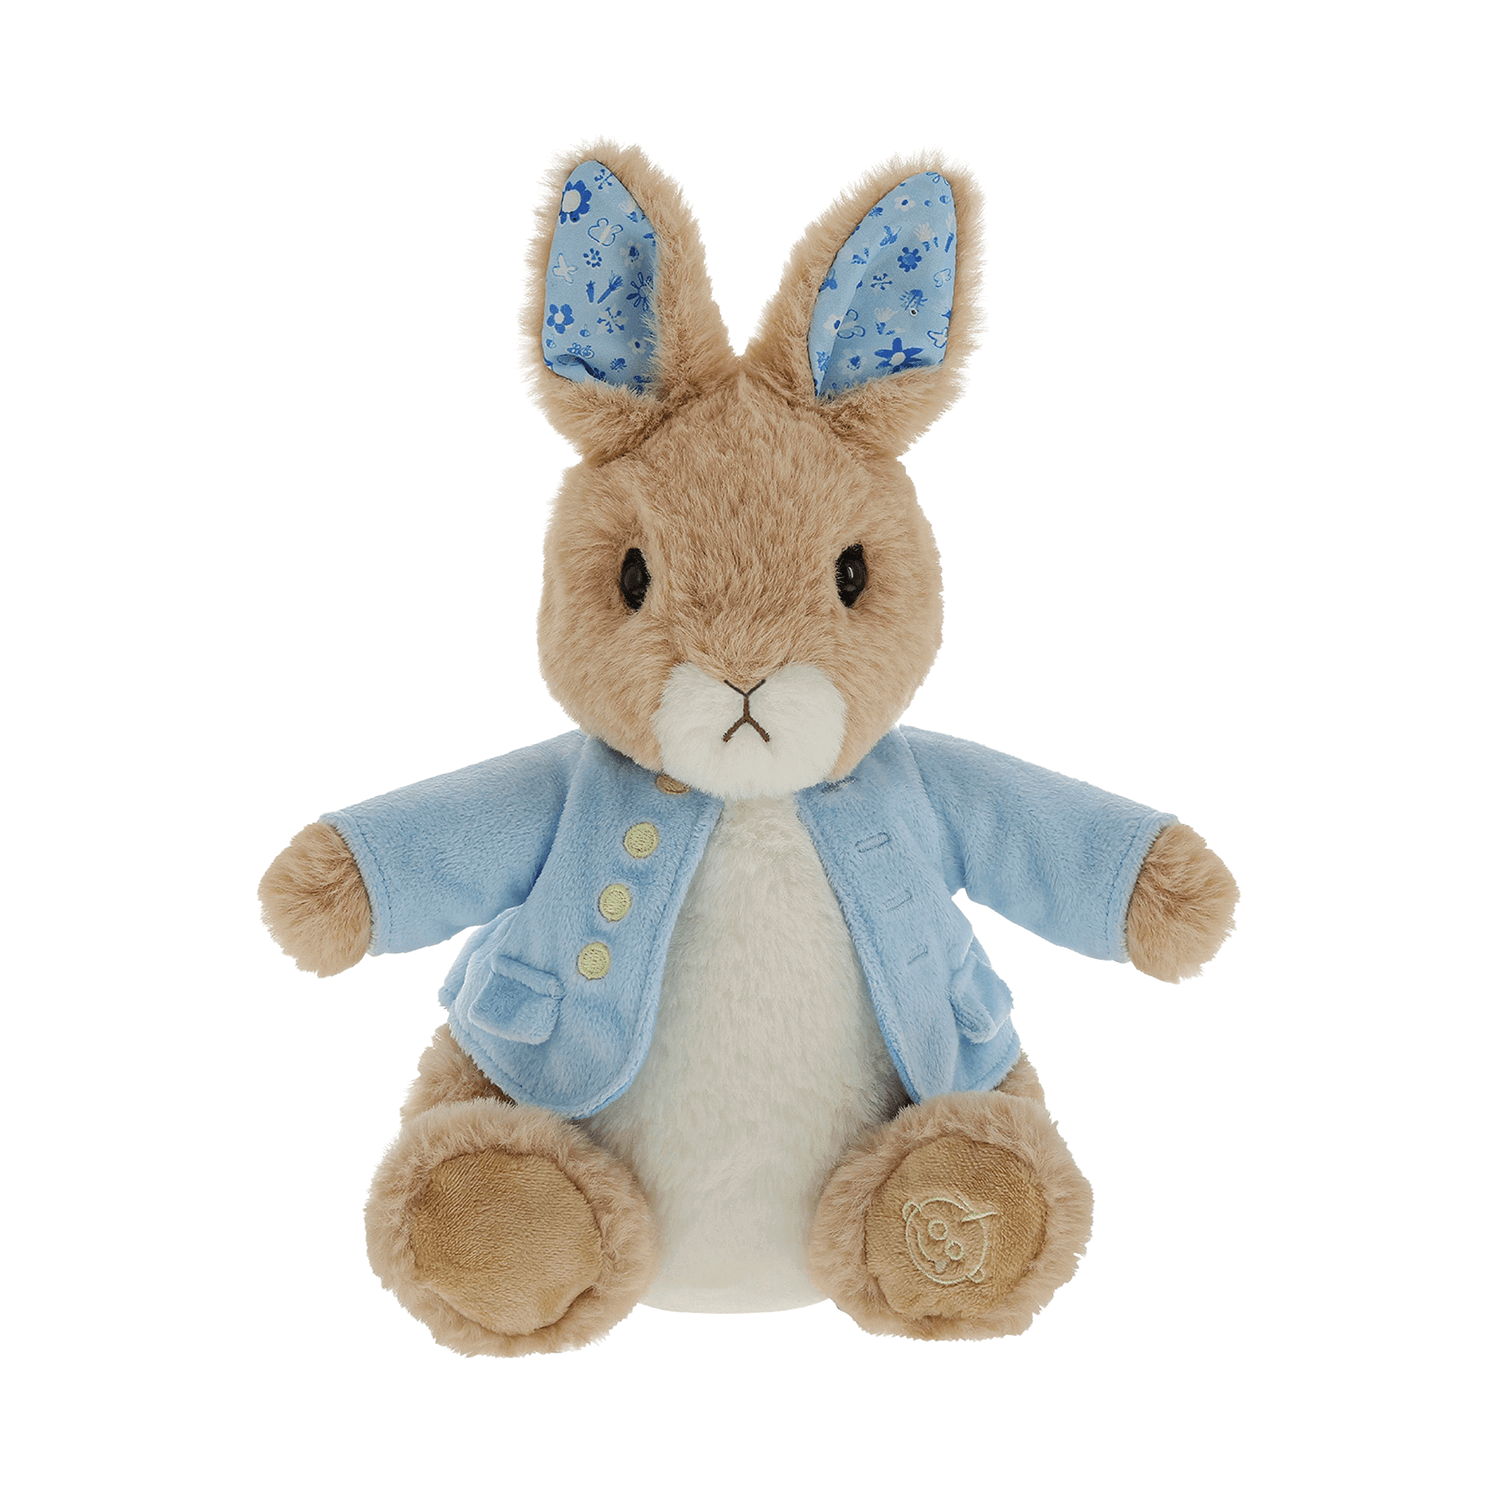 GOSH Charity Arts Peter Rabbit Soft toy